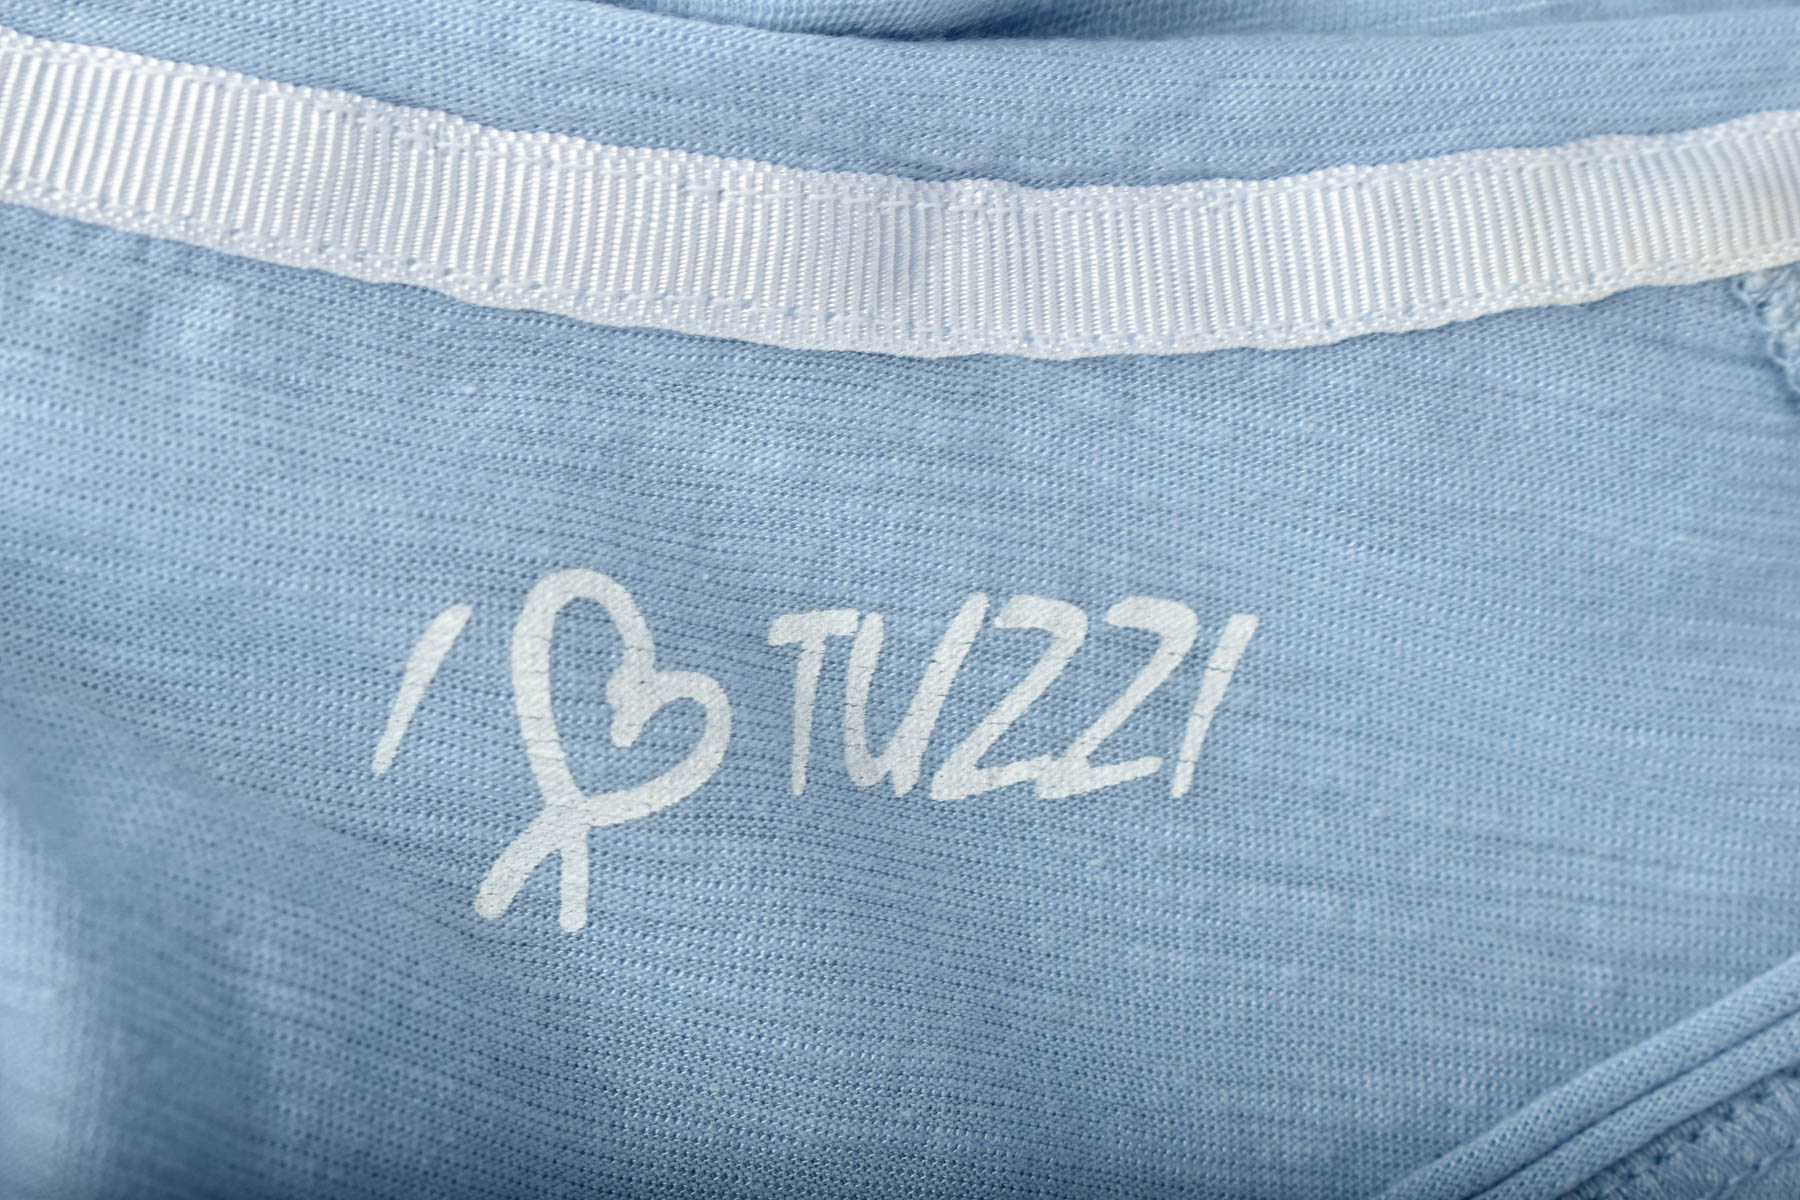 Women's t-shirt - I love tuzzi - 2